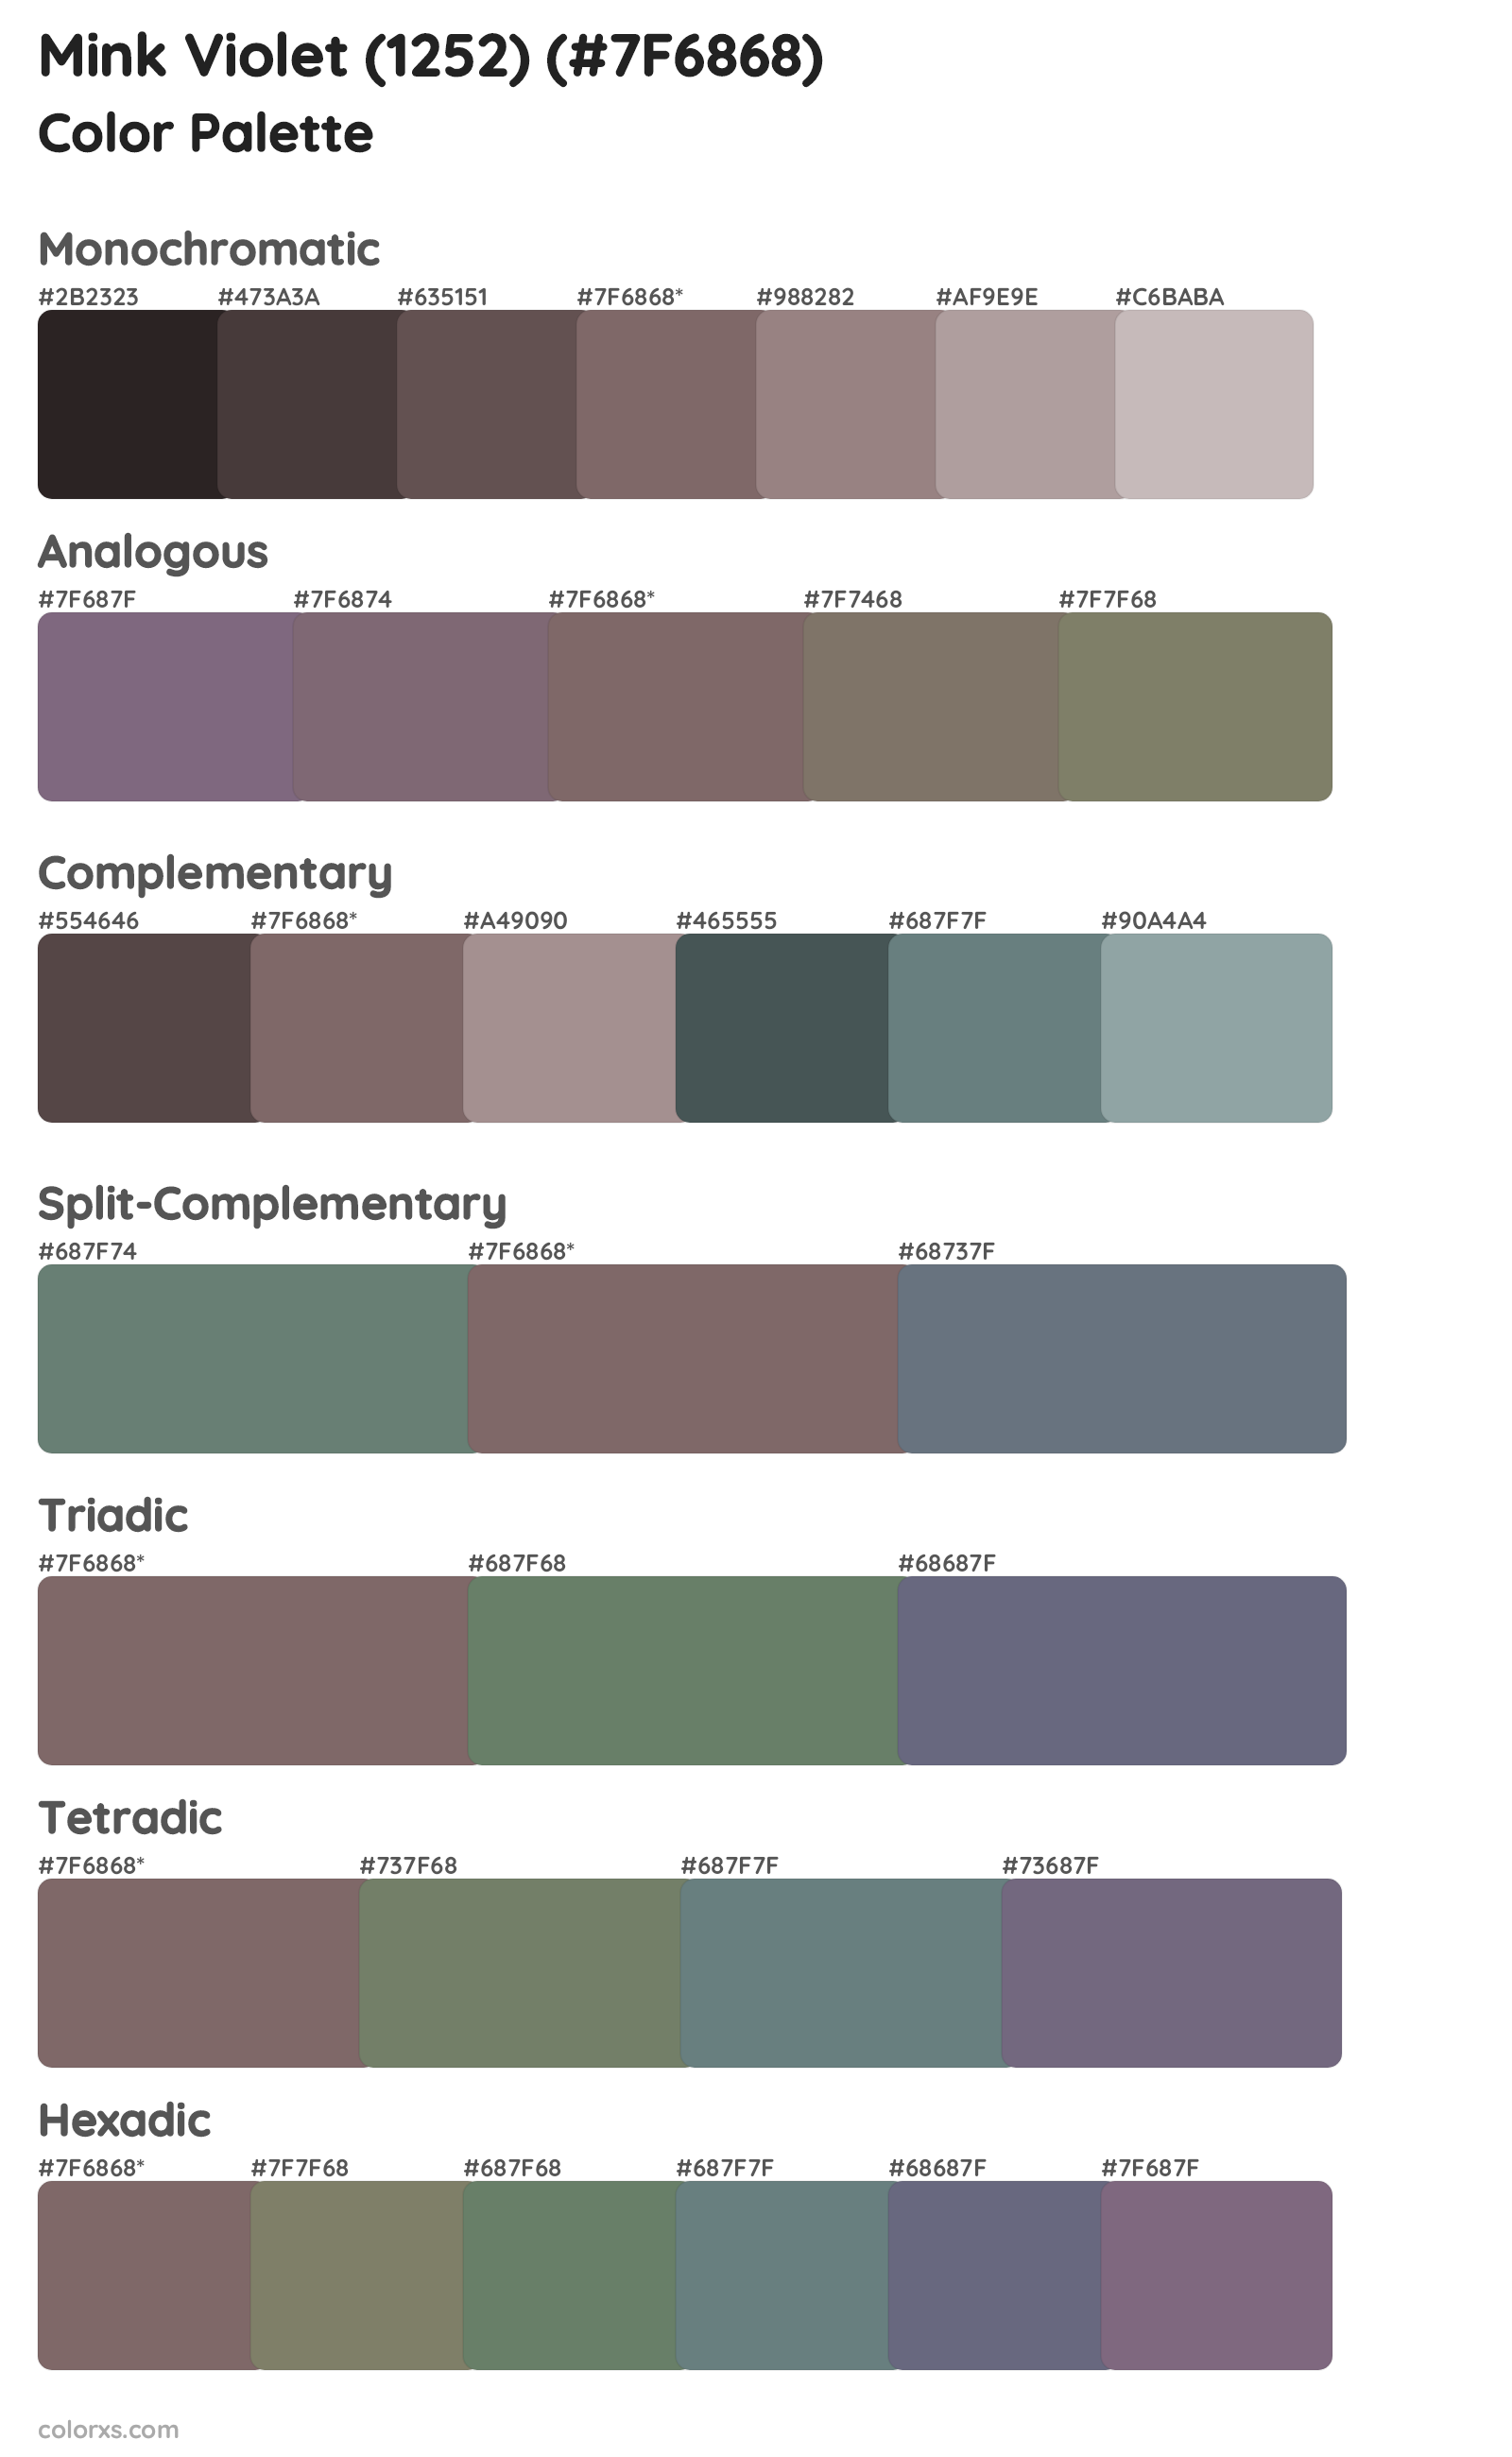 Mink Violet (1252) Color Scheme Palettes